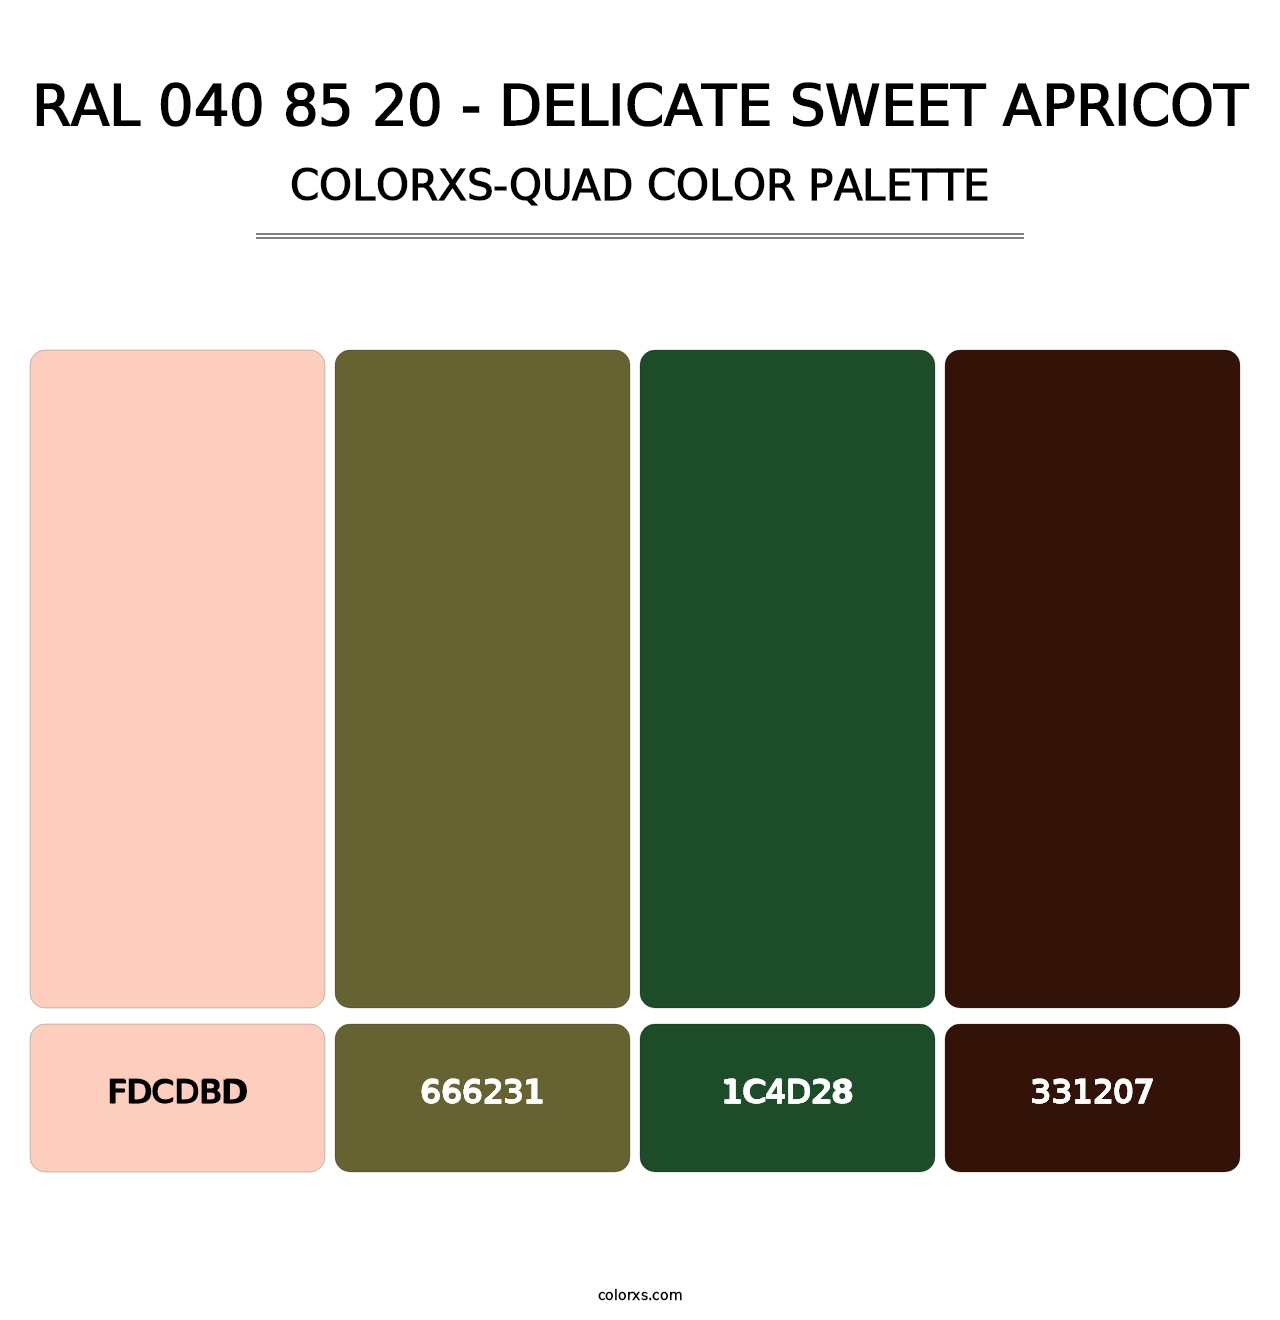 RAL 040 85 20 - Delicate Sweet Apricot - Colorxs Quad Palette